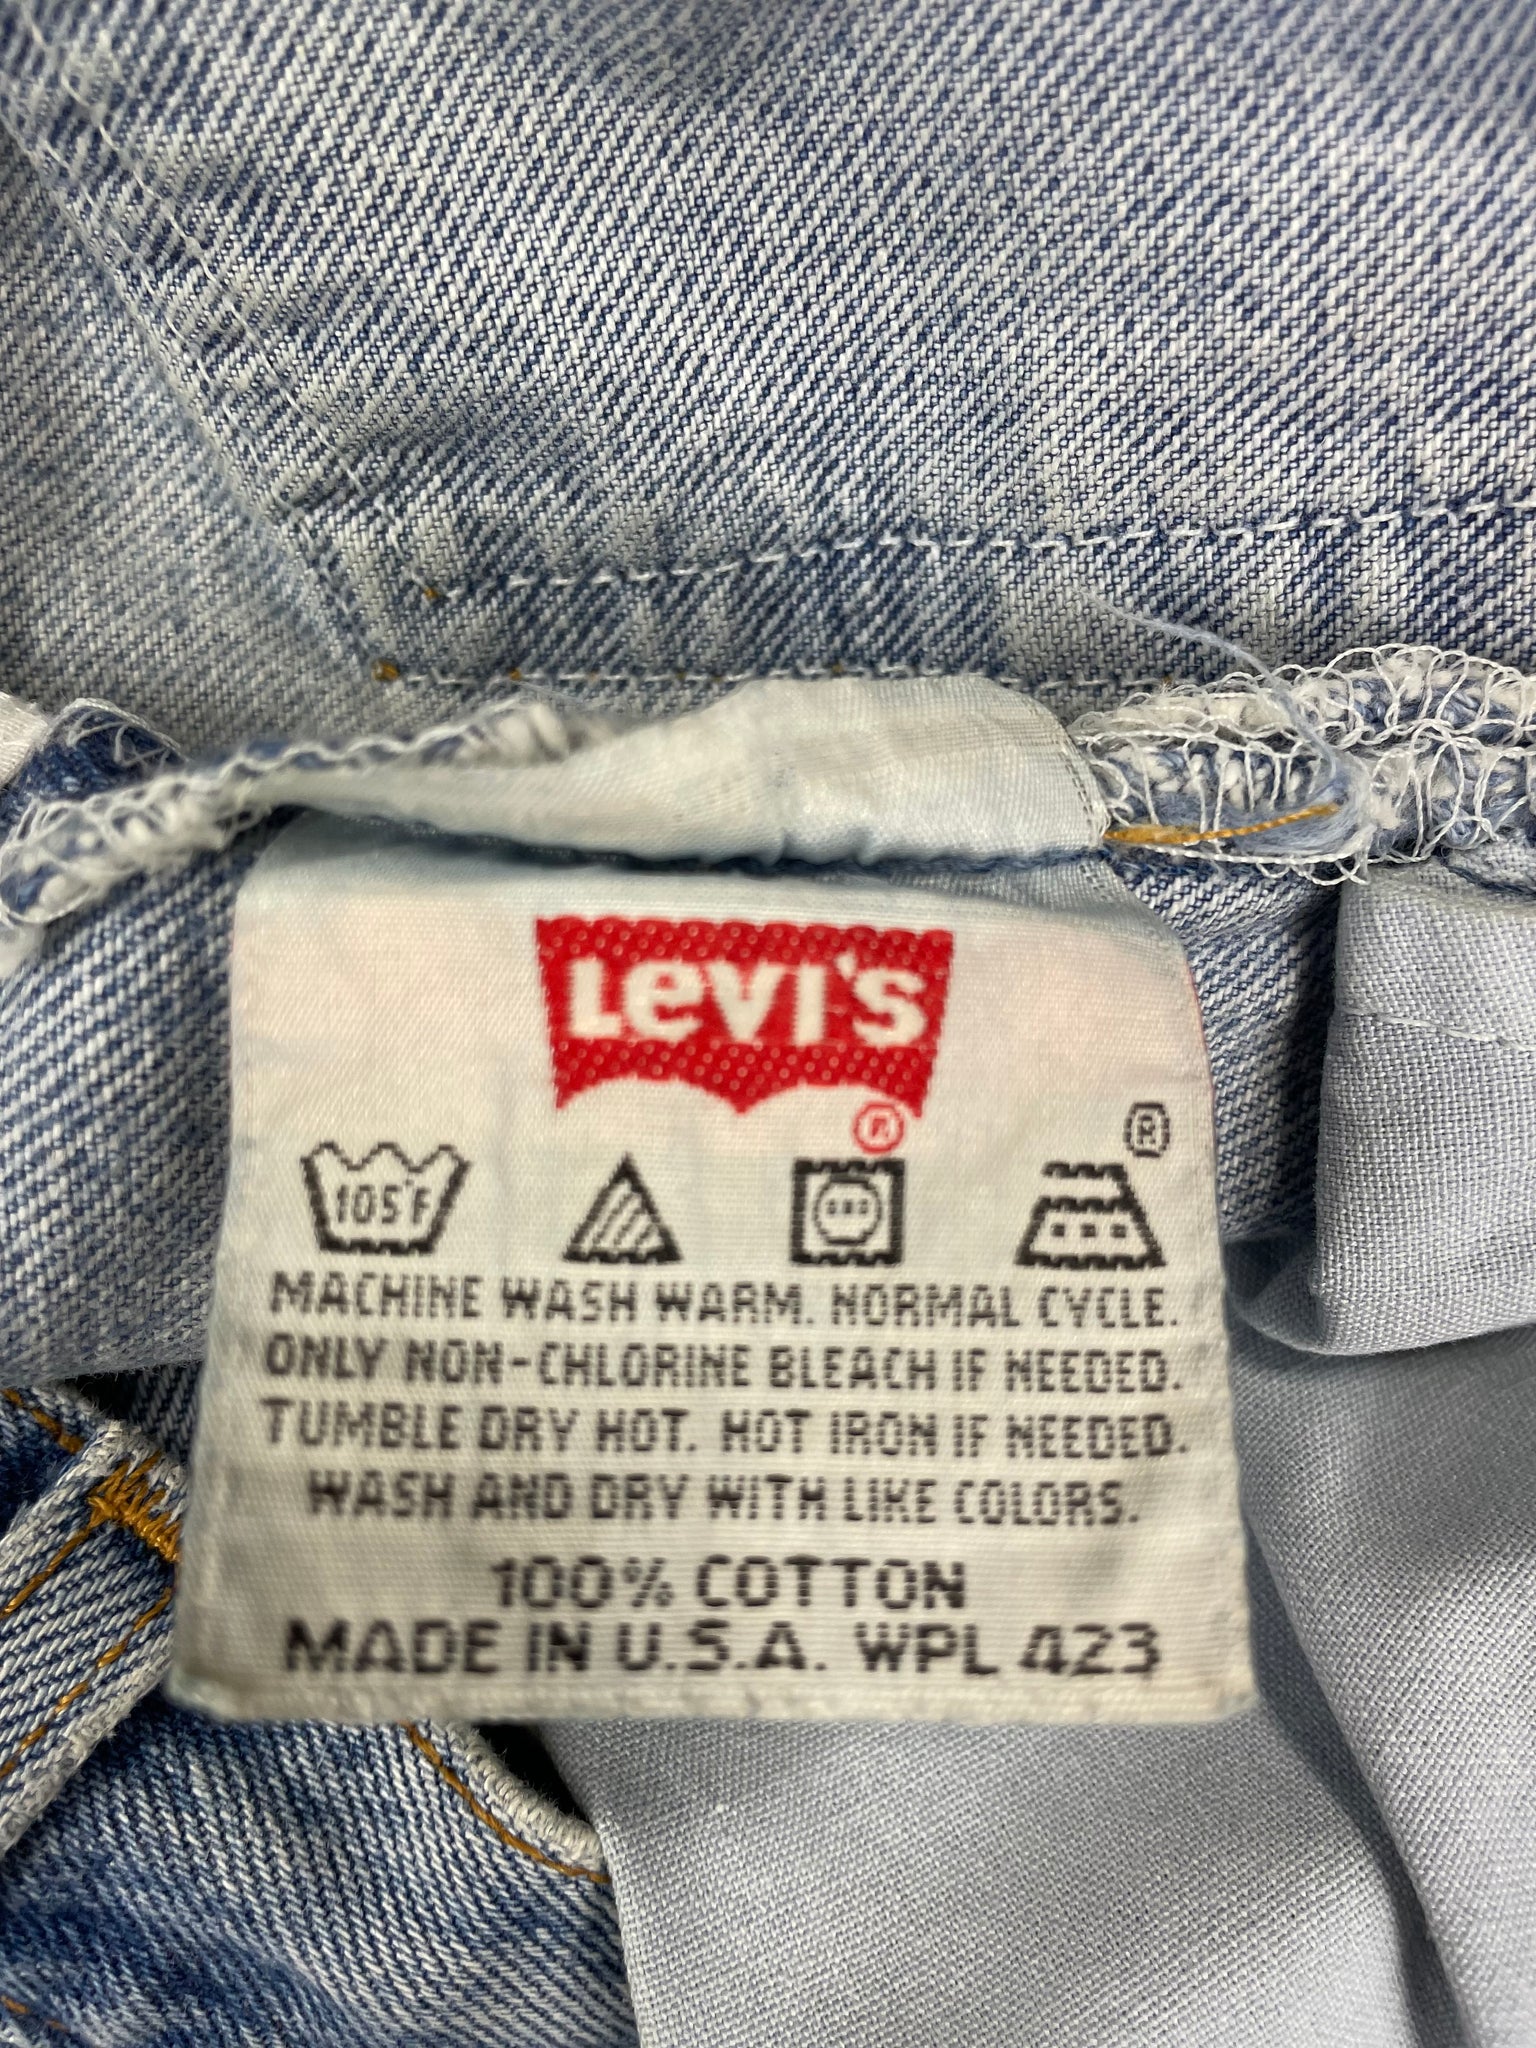 Vintage Levi 501 Lace Trim Cutoff Shorts (JYJ-078)